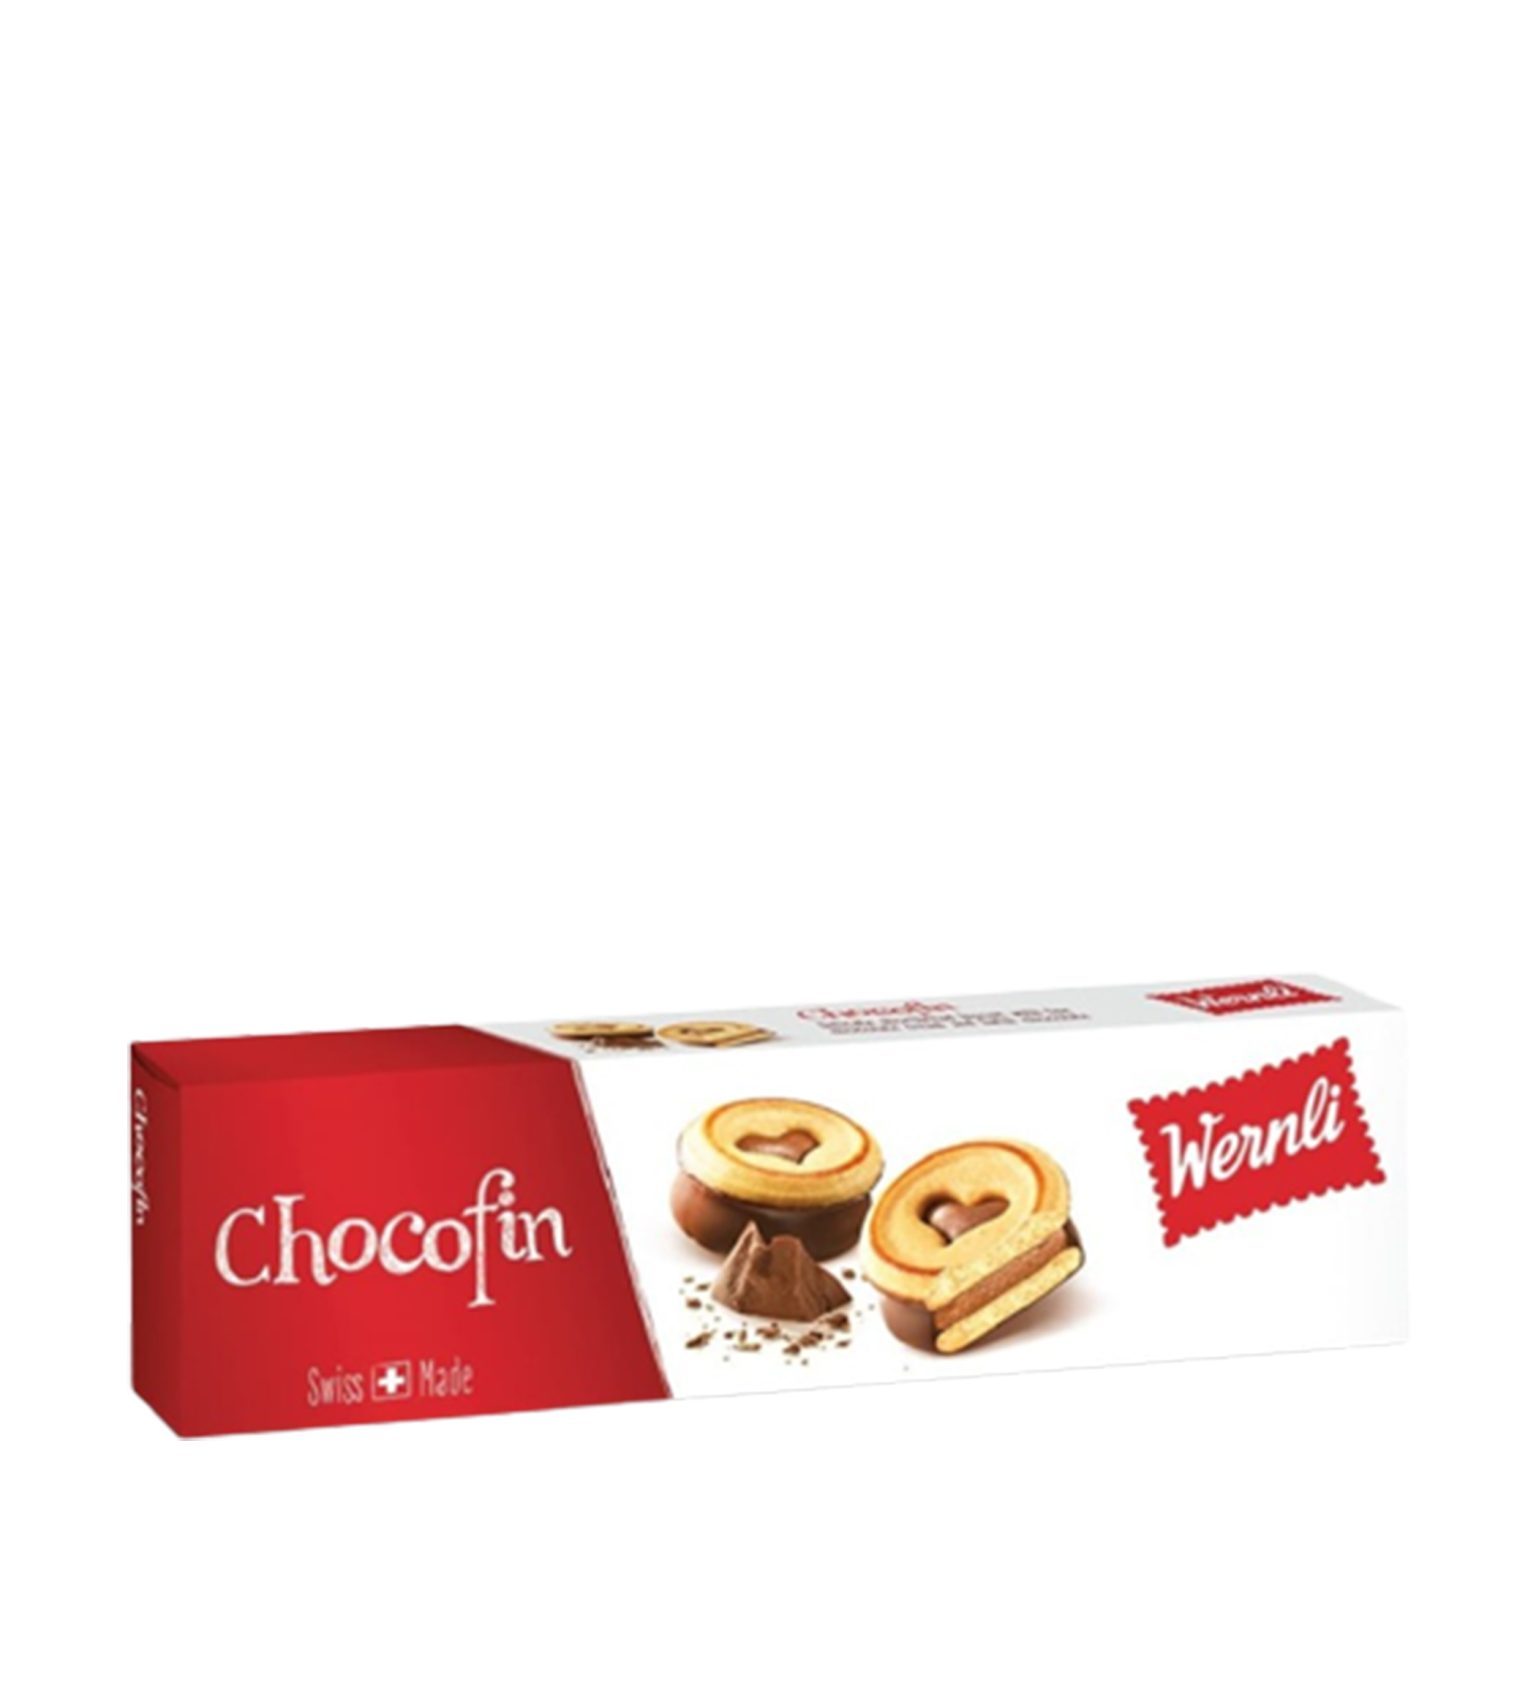 Wernli Biscuit Chocofin 100g main image